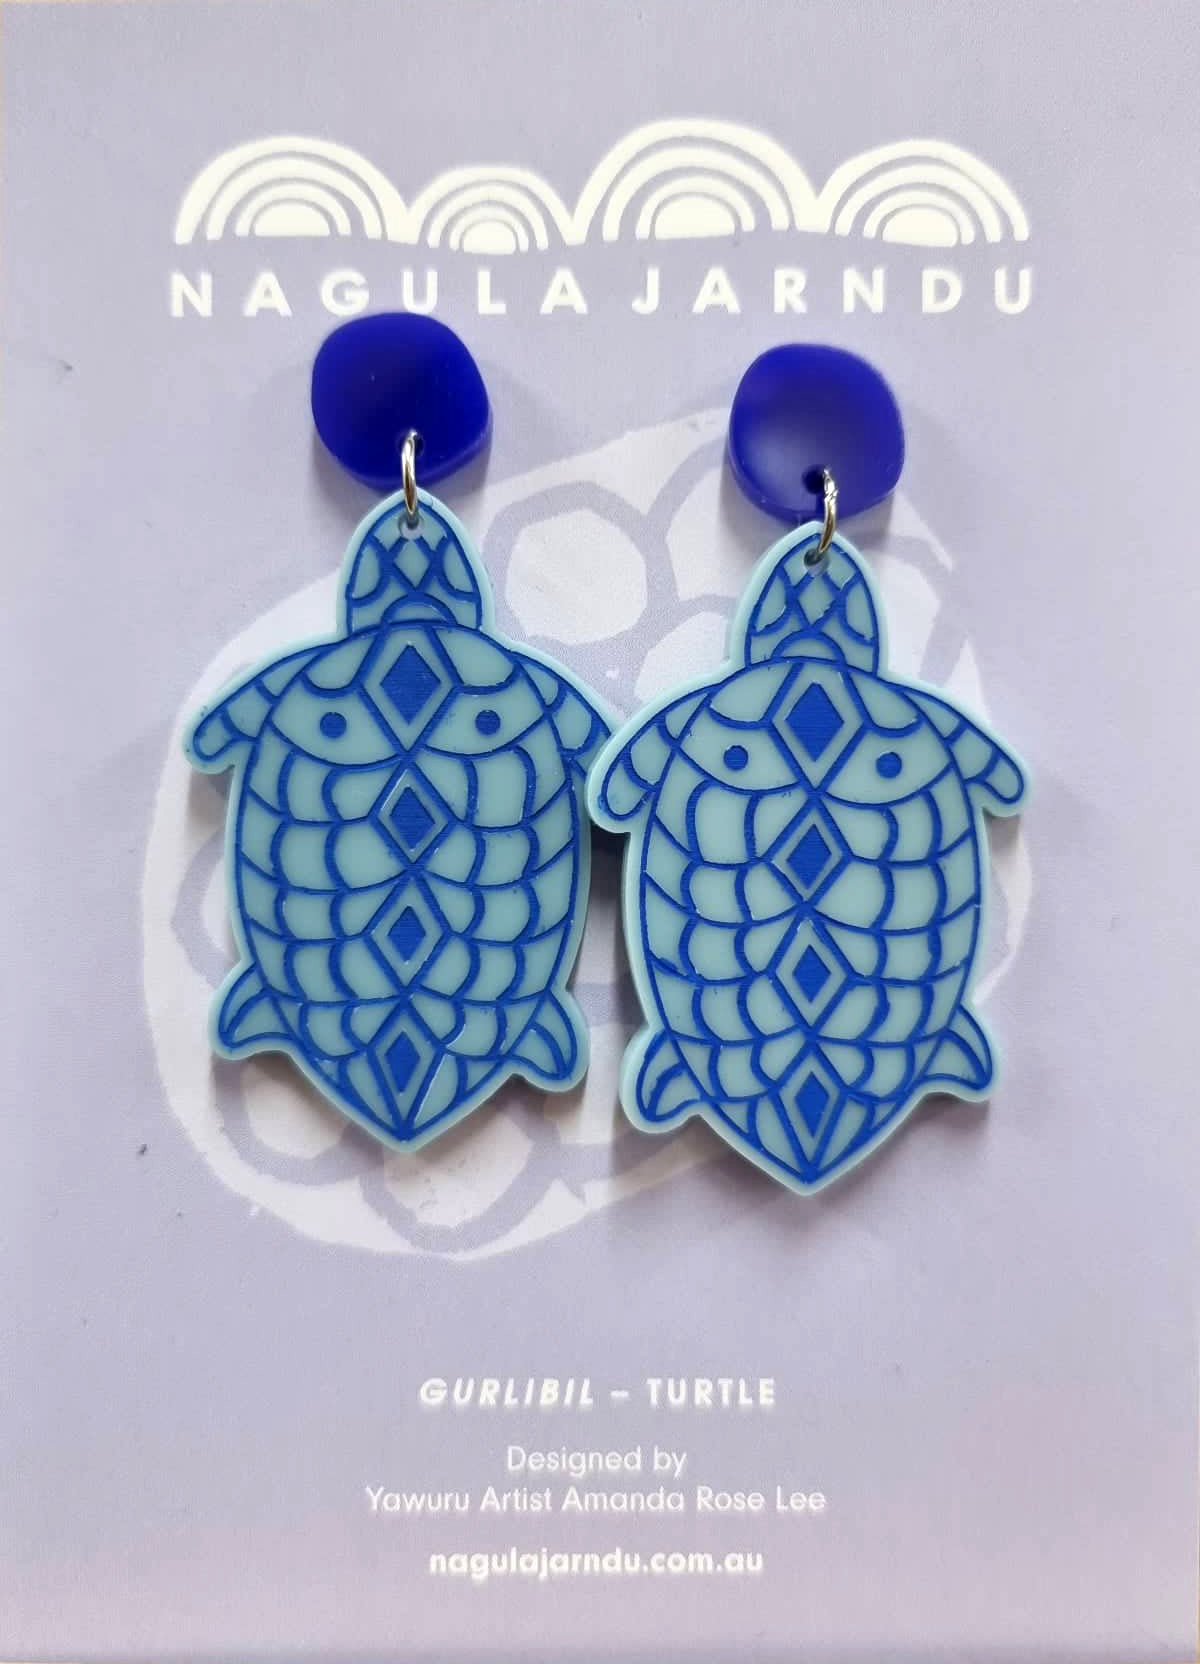 Gurlibil - Turtle earrings by Nagula Jarndu